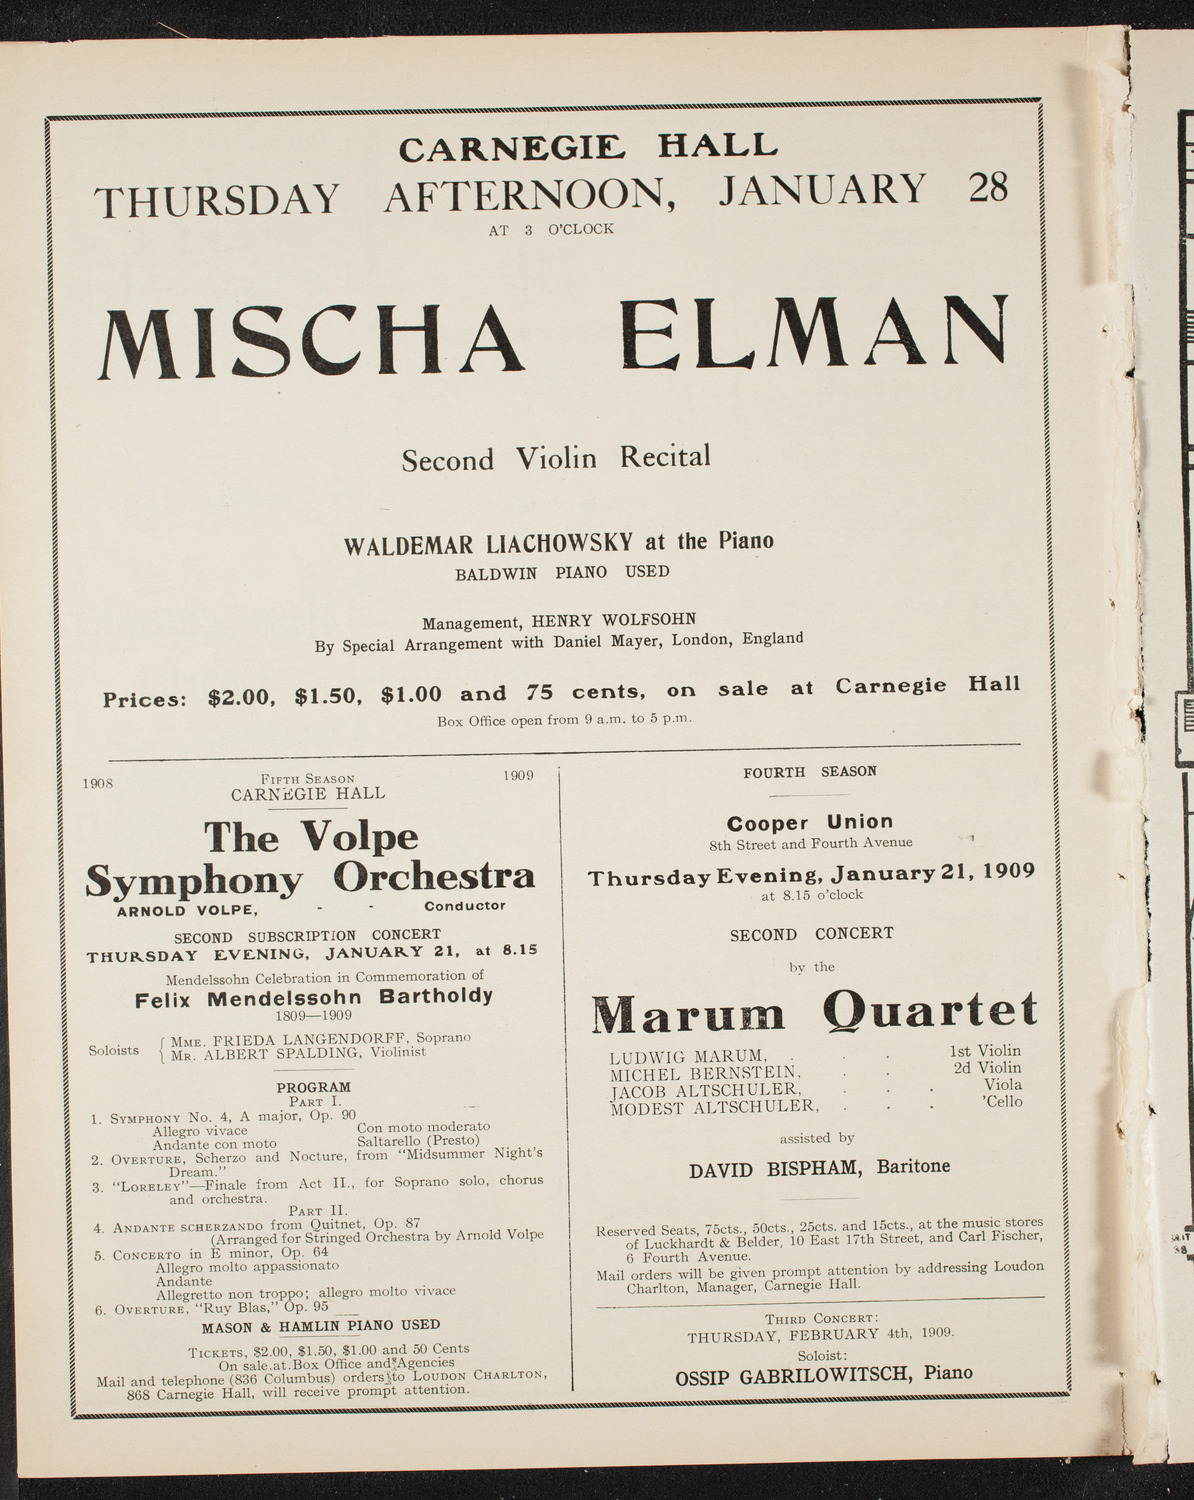 Maria E. Orthen, Soprano, January 17, 1909, program page 10